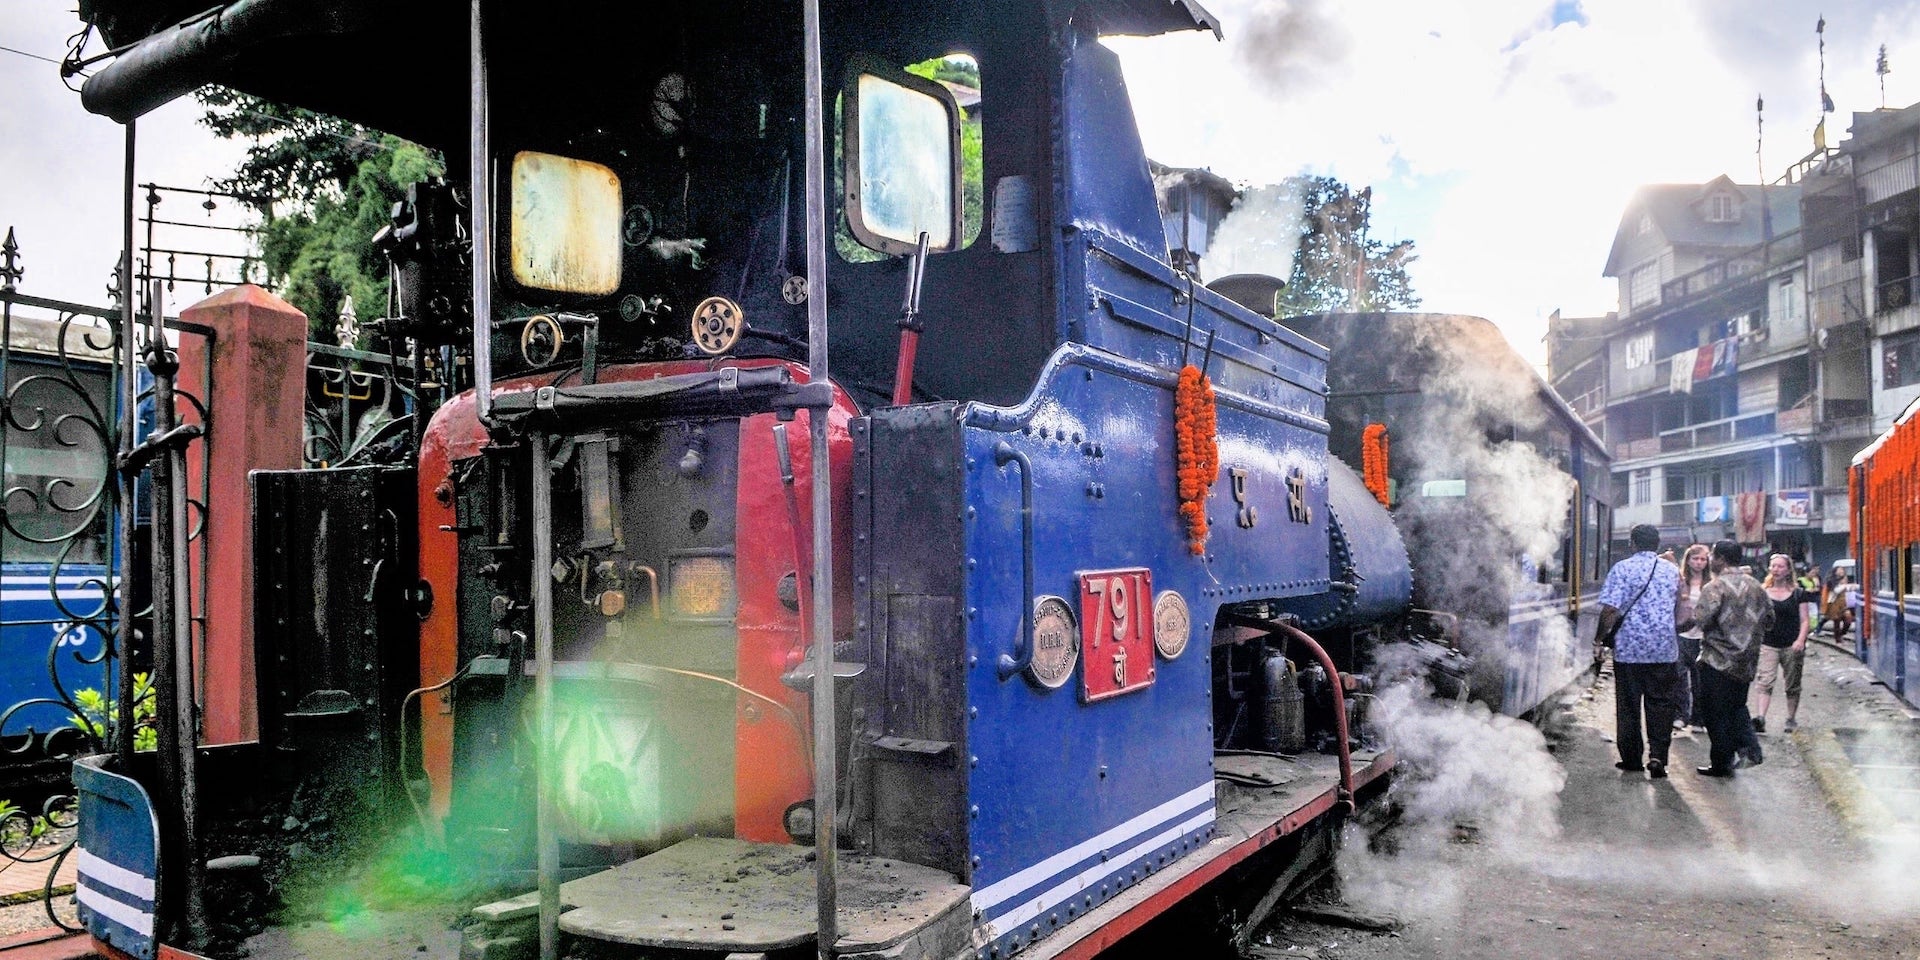 Darjeeling Toy Train India